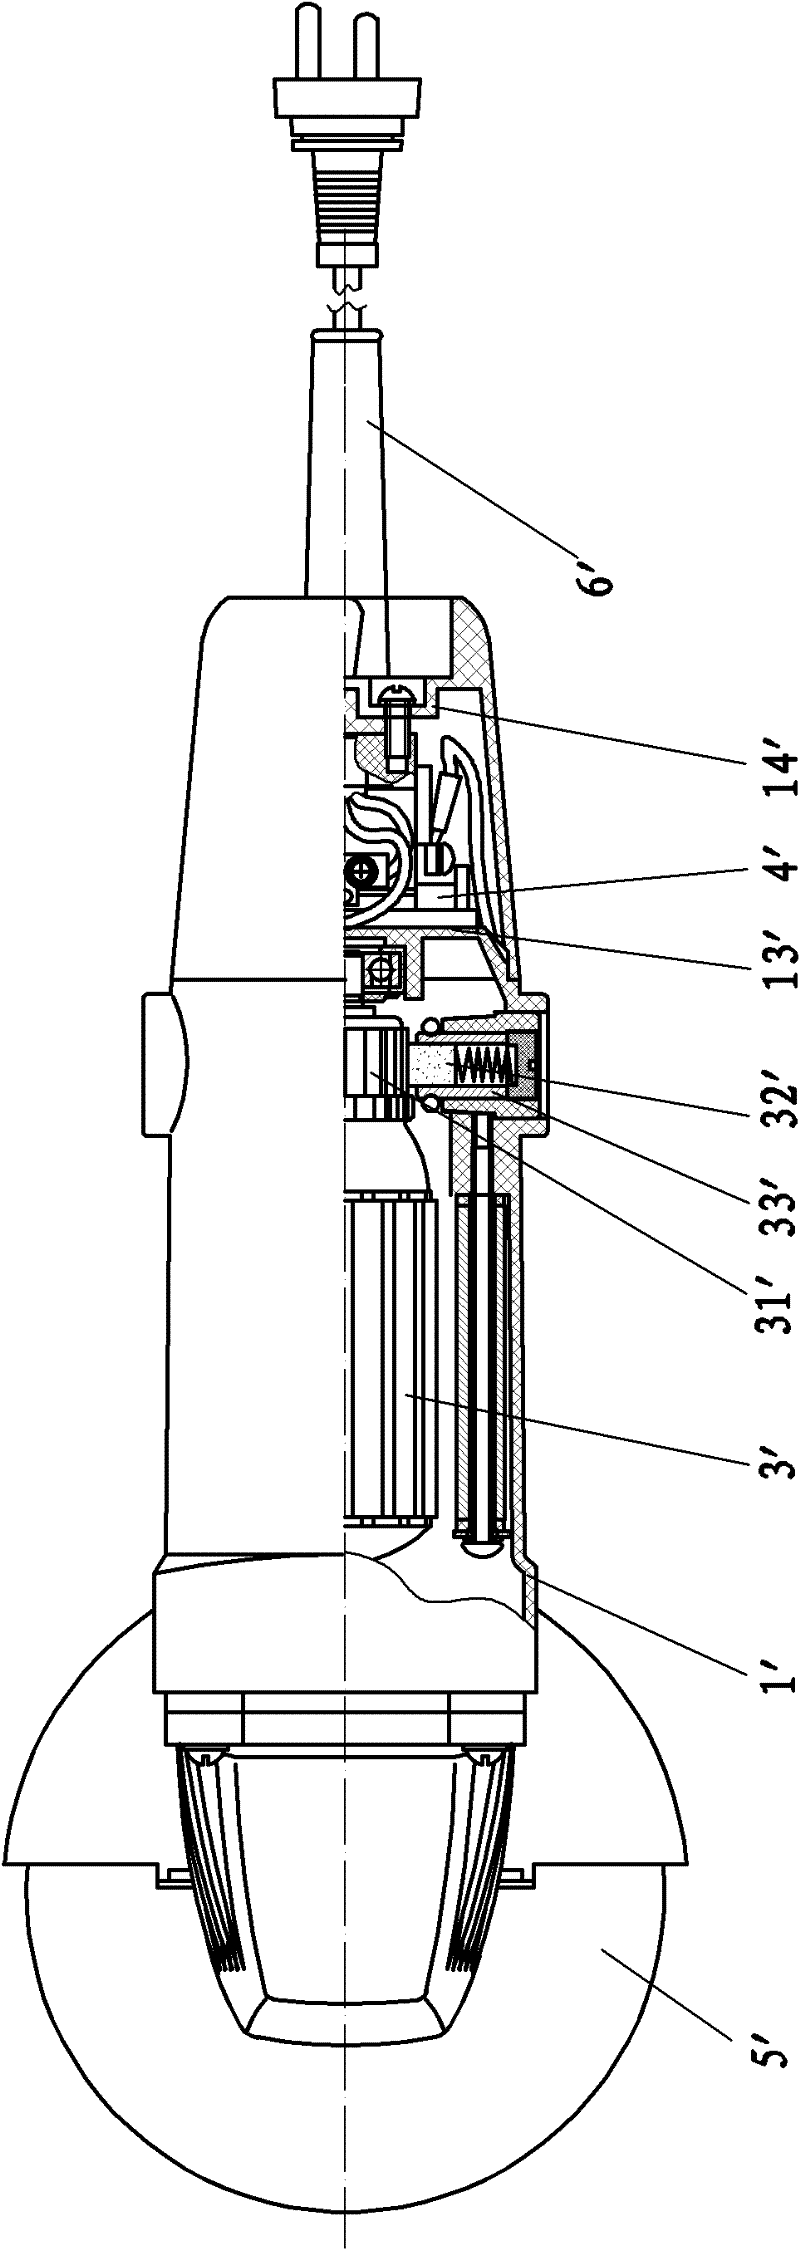 Handheld electric angle grinder